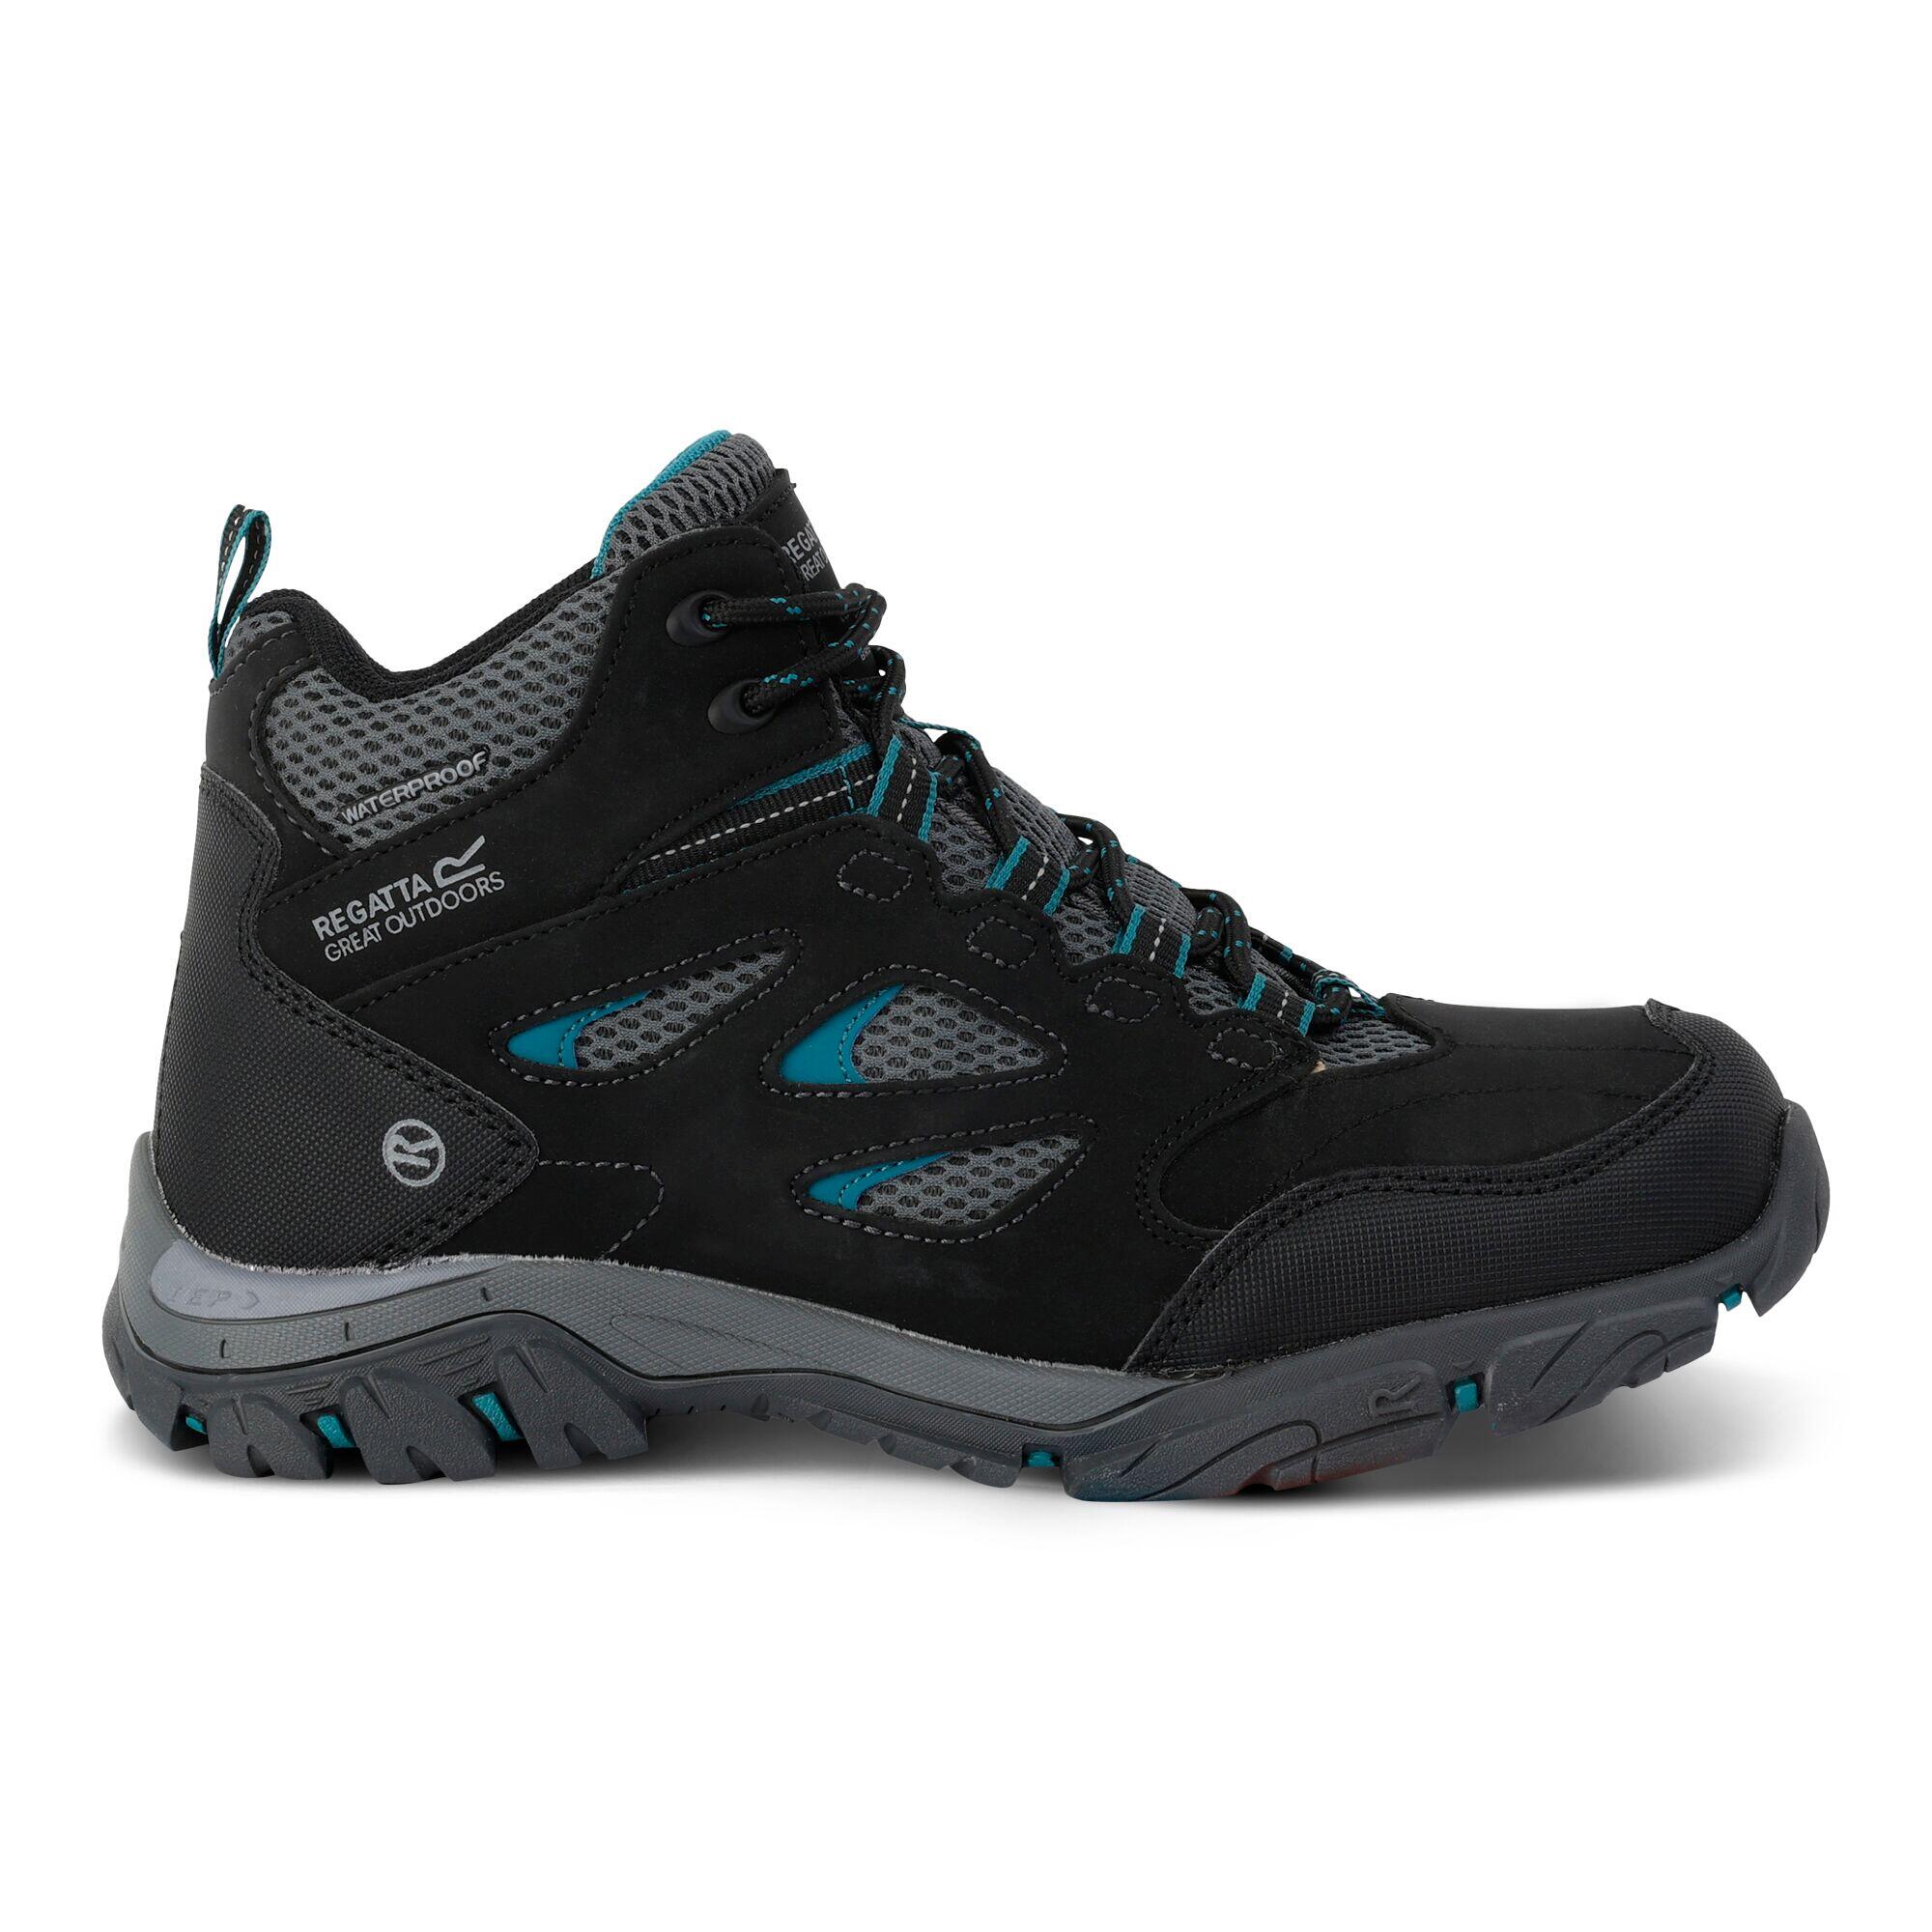 REGATTA Lady Holcombe IEP Mid Women's Hiking Boots - Black / Blue